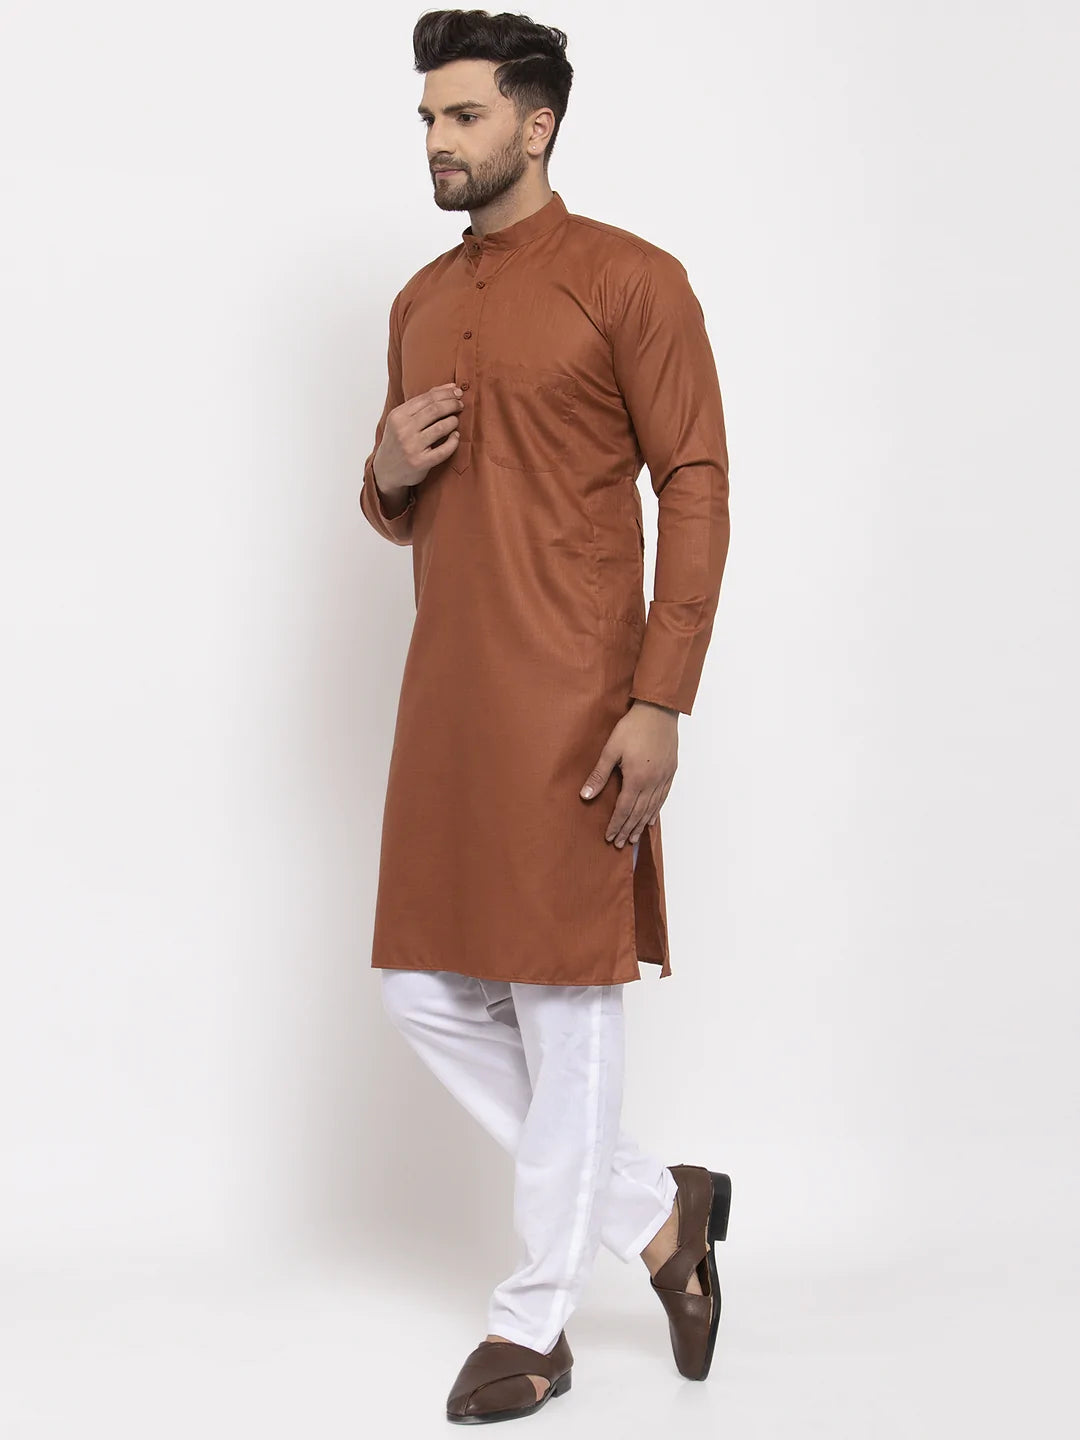 Jompers Men's Brown Cotton Solid Kurta Payjama Sets ( JOKP 611 Brown )